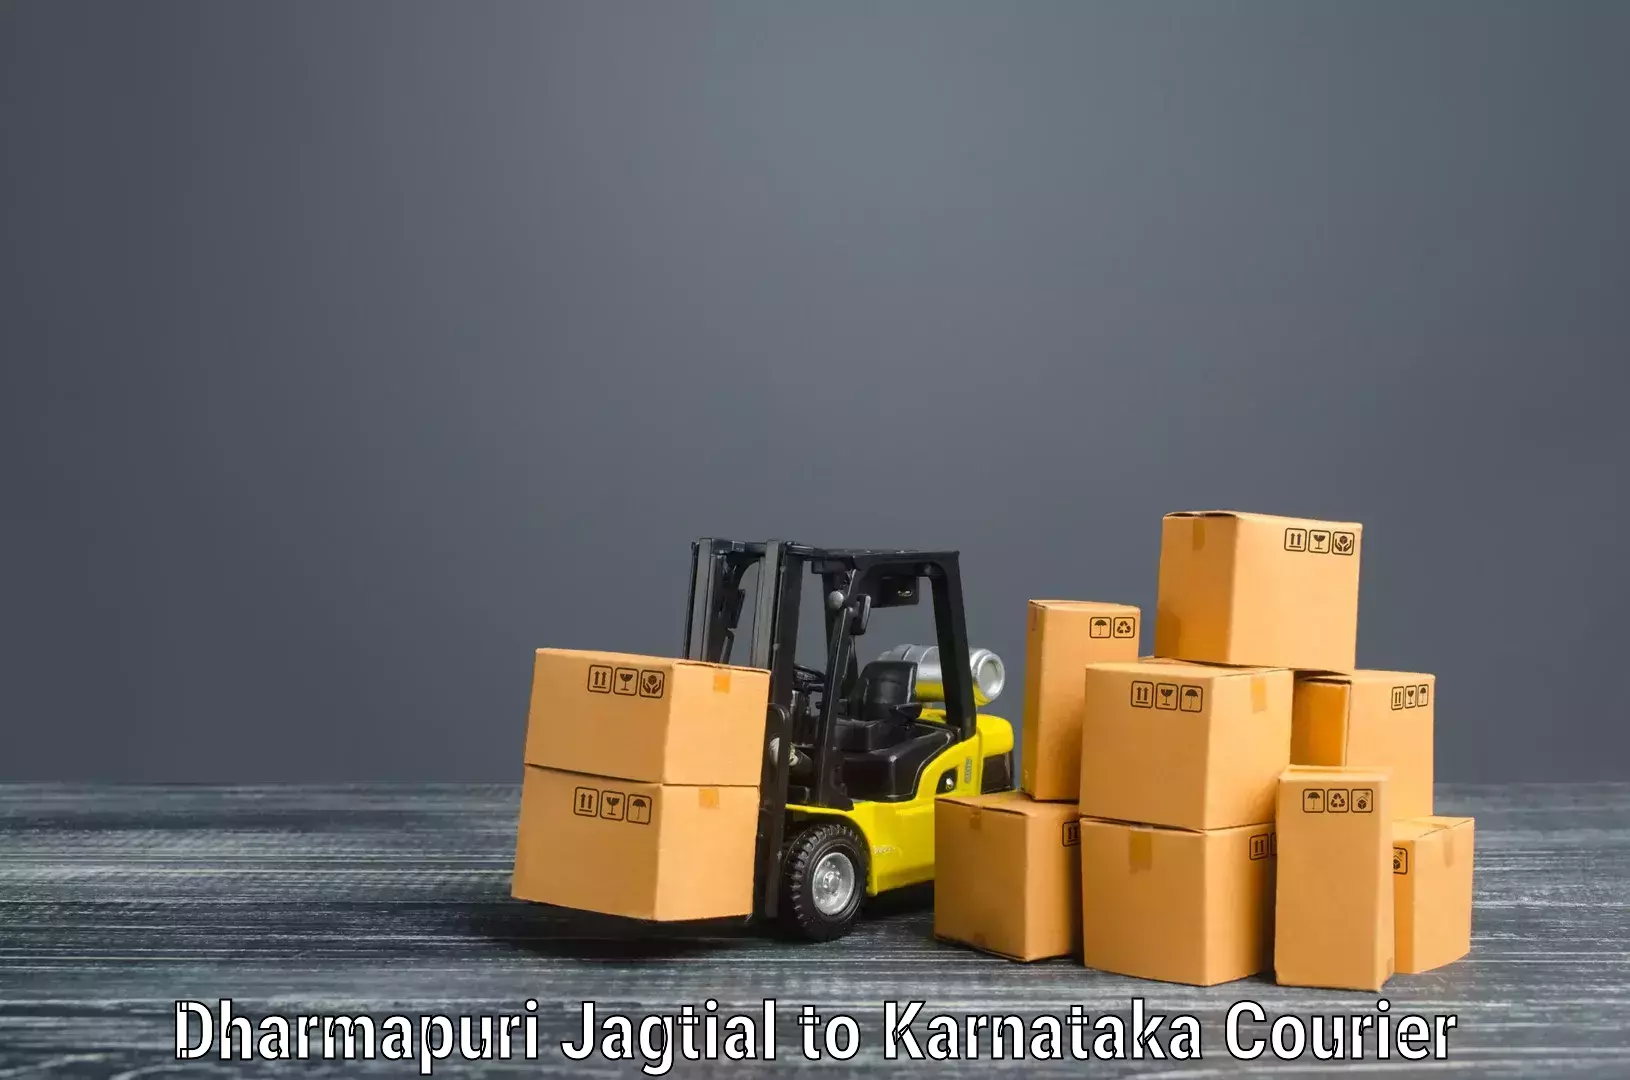 Quality moving company Dharmapuri Jagtial to Belagavi